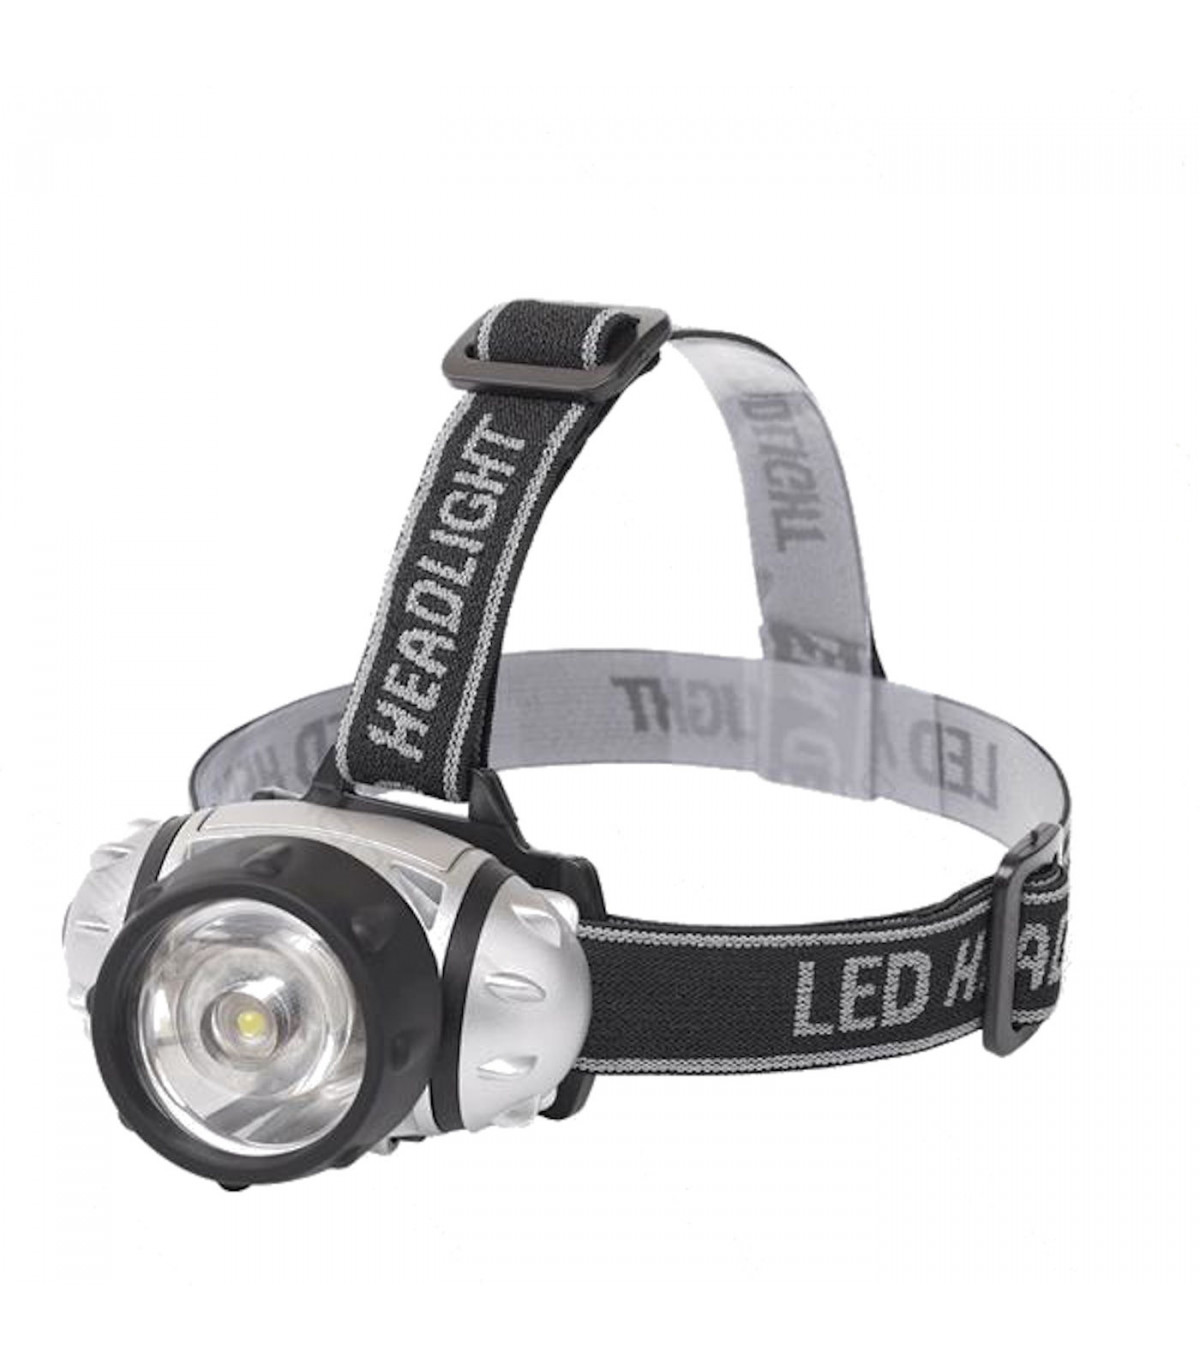 Linterna de cabeza de led con varios modos de luz, detector de